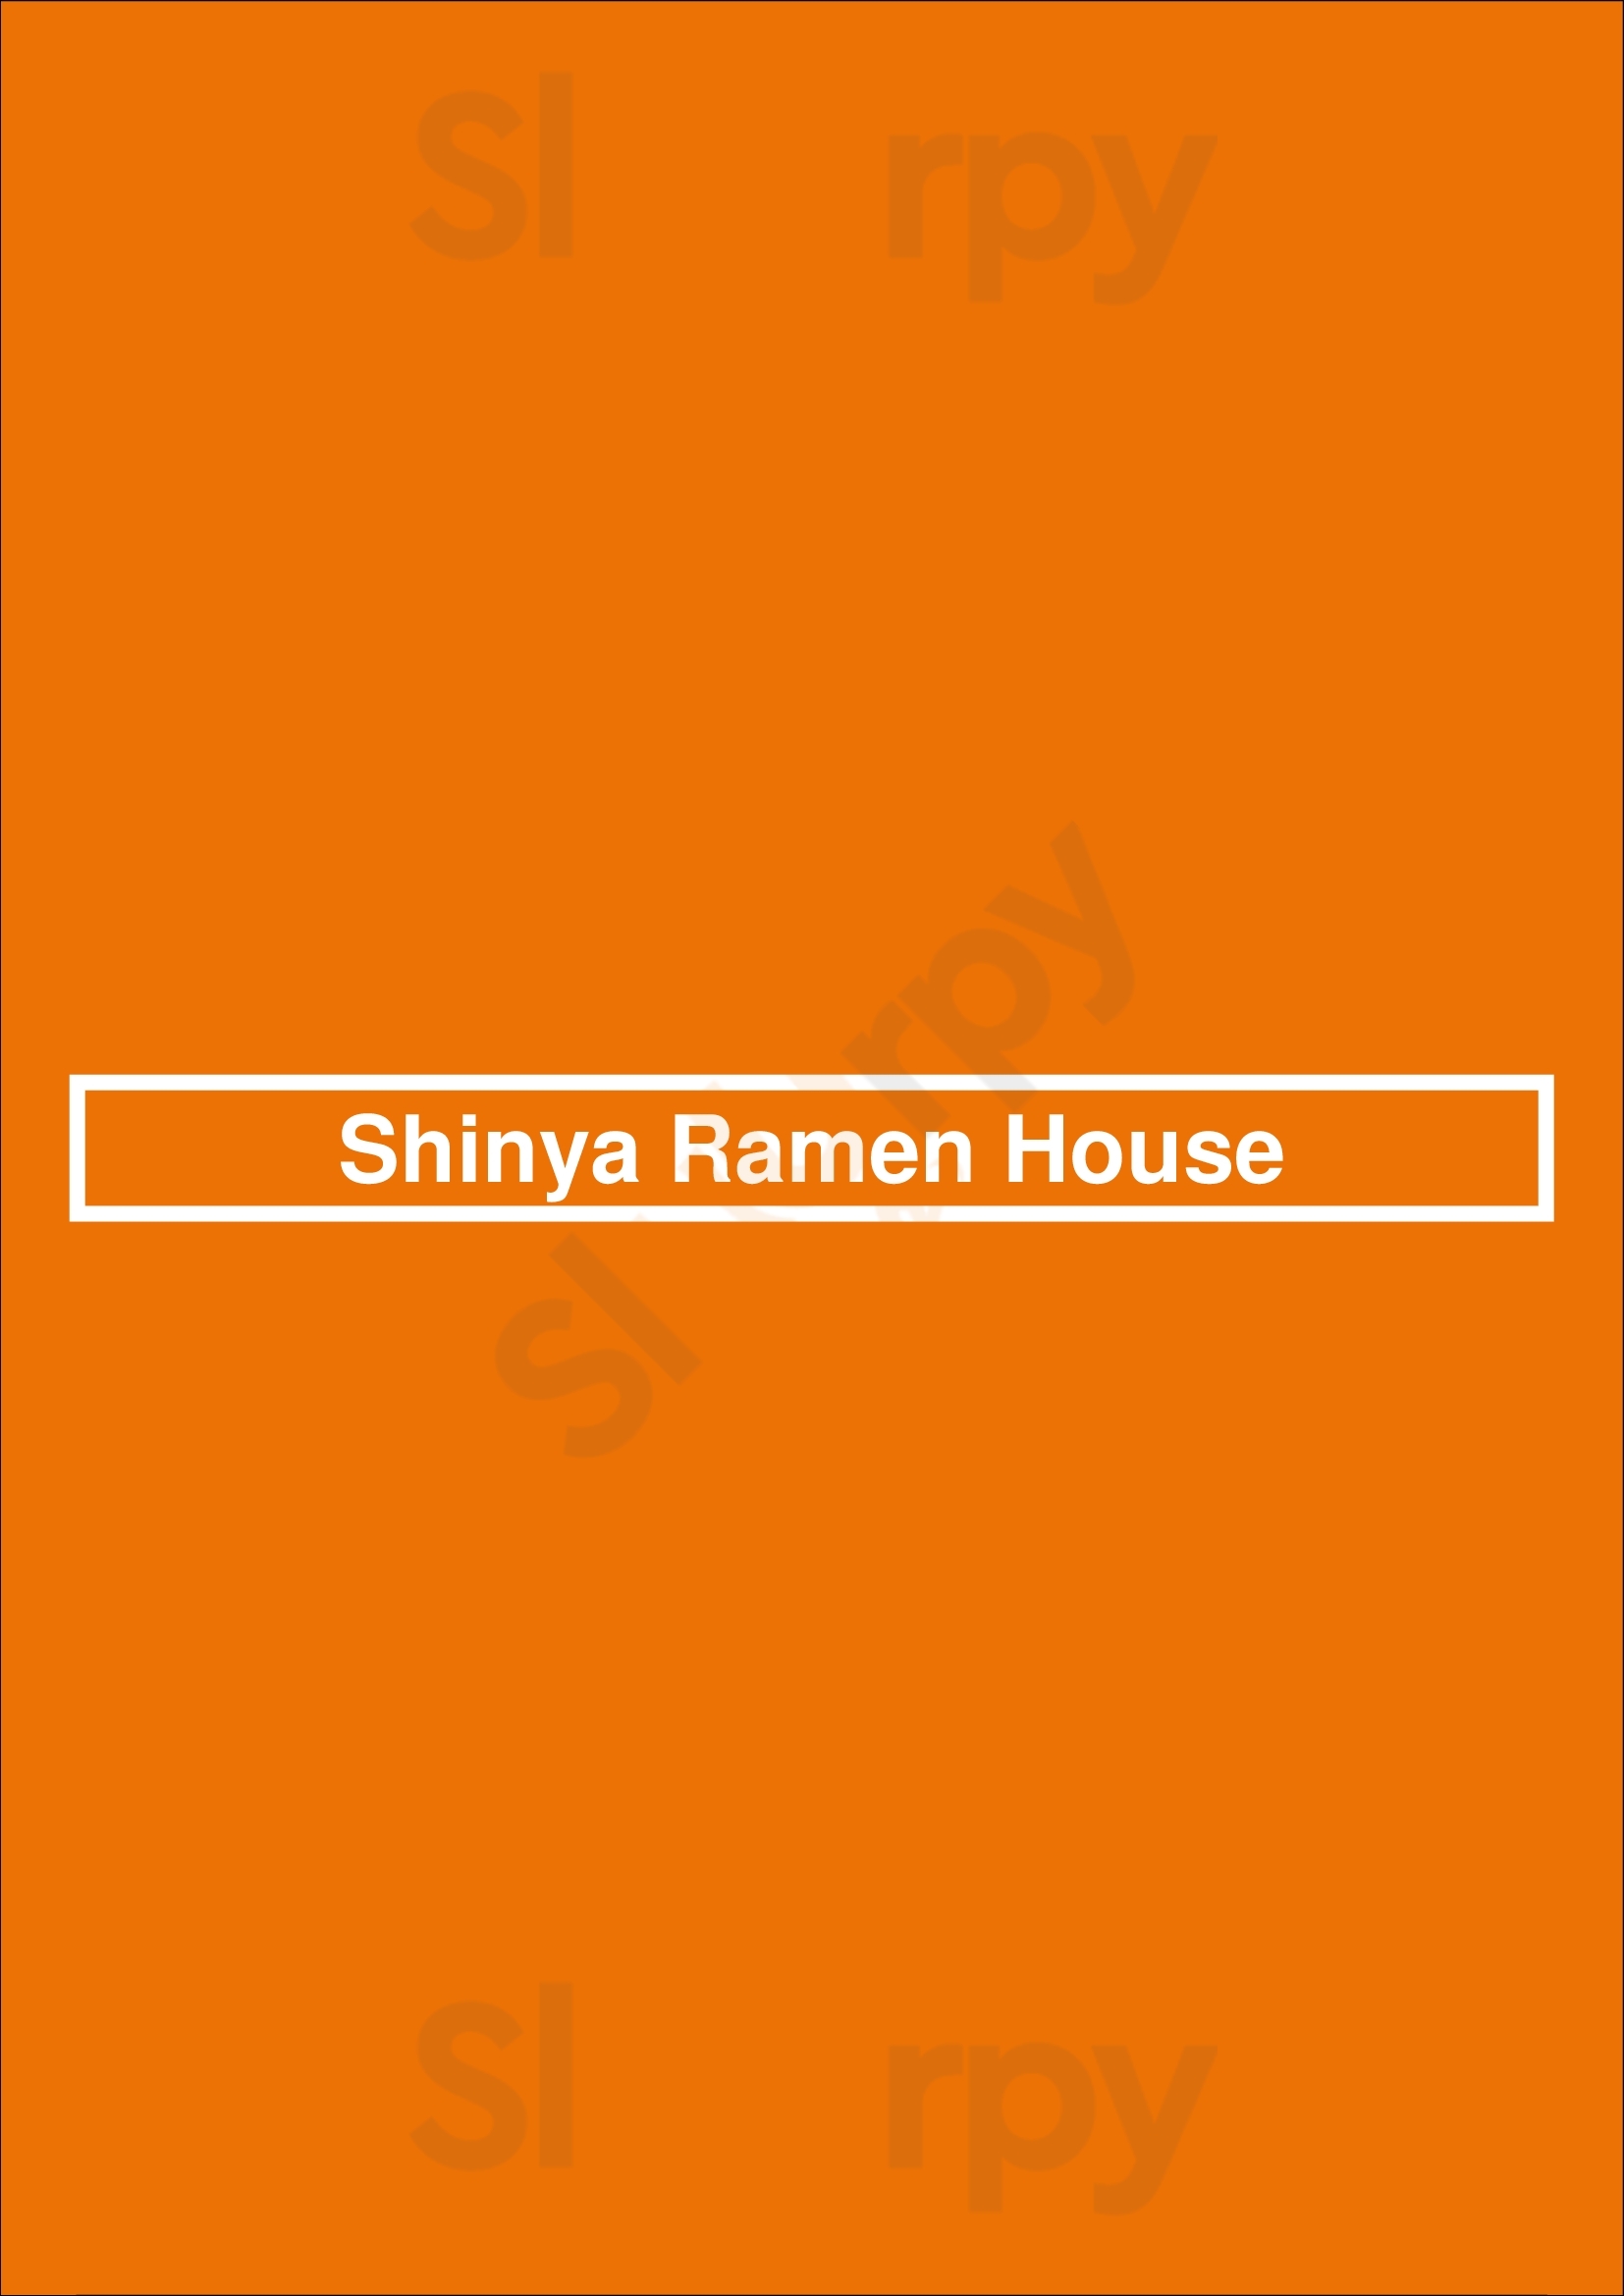 Shinya Ramen House Chicago Menu - 1